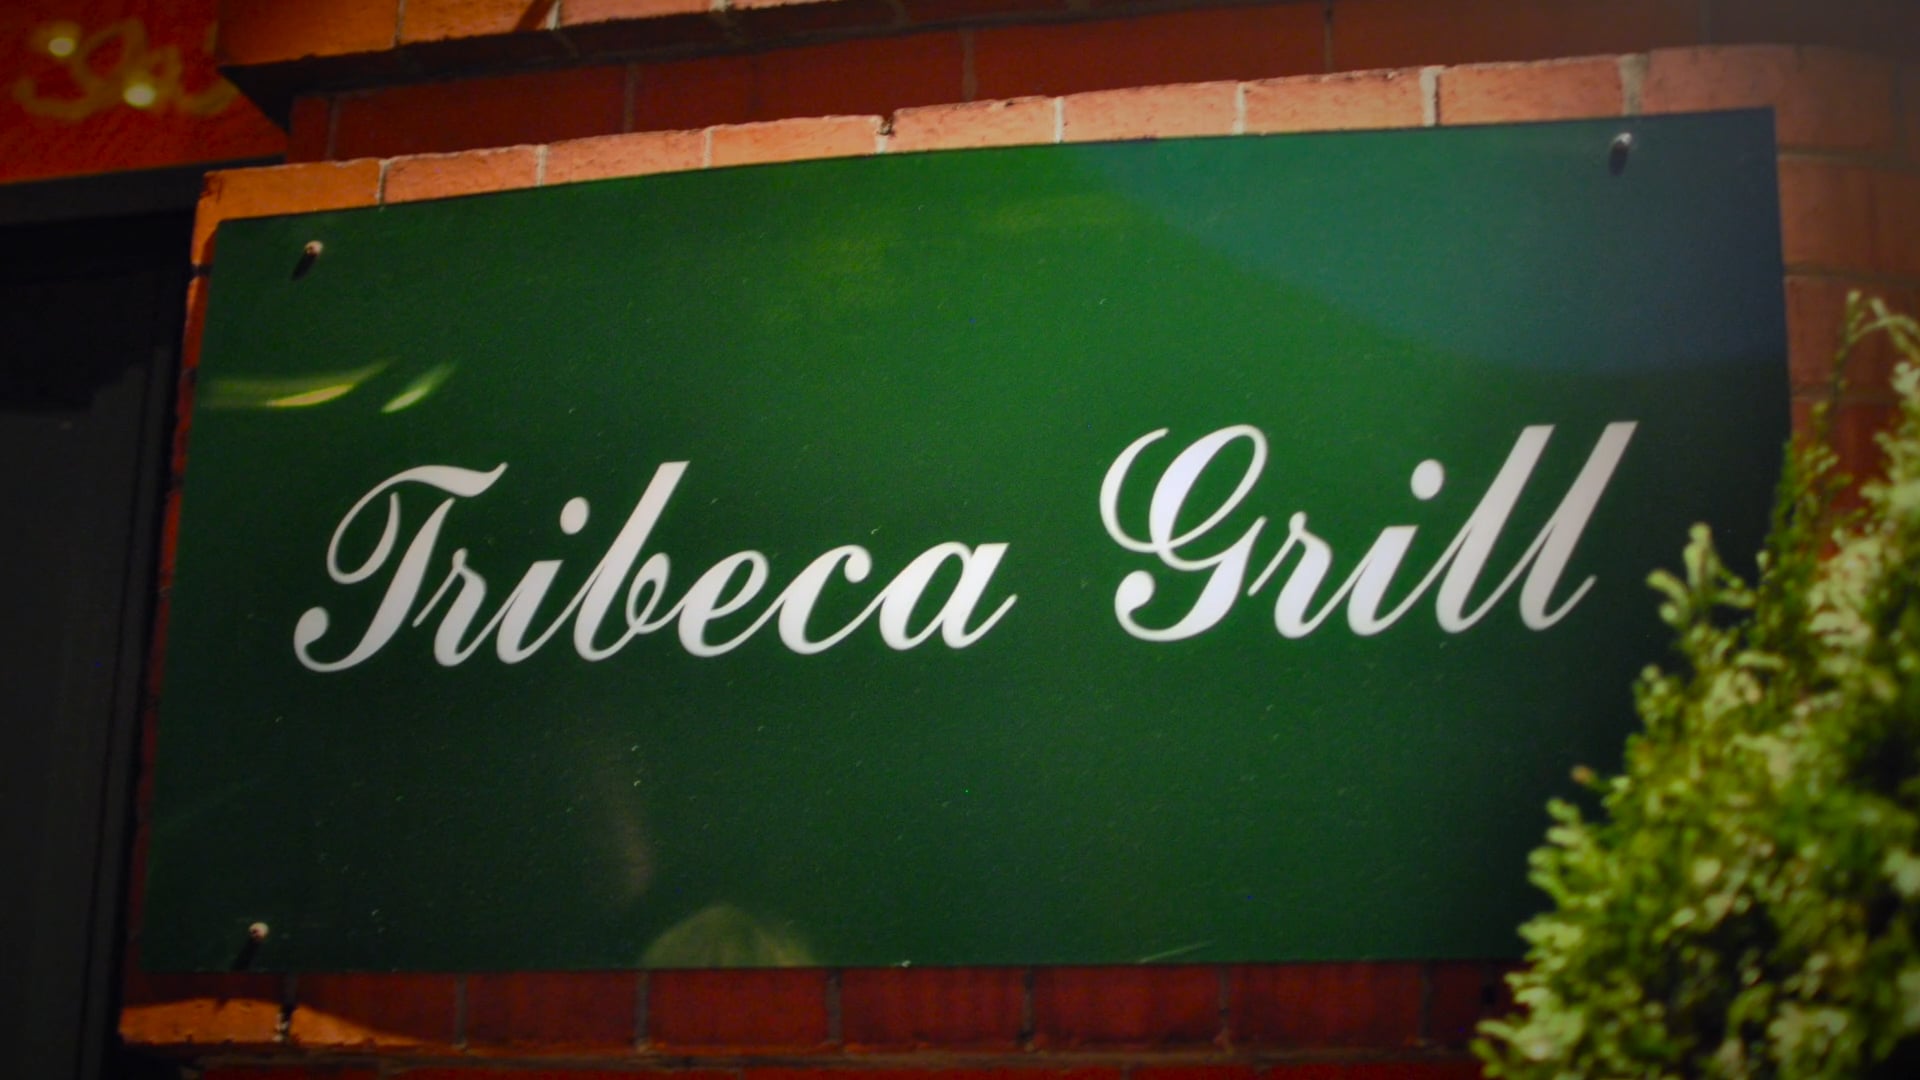 Tribeca Grill, NYC